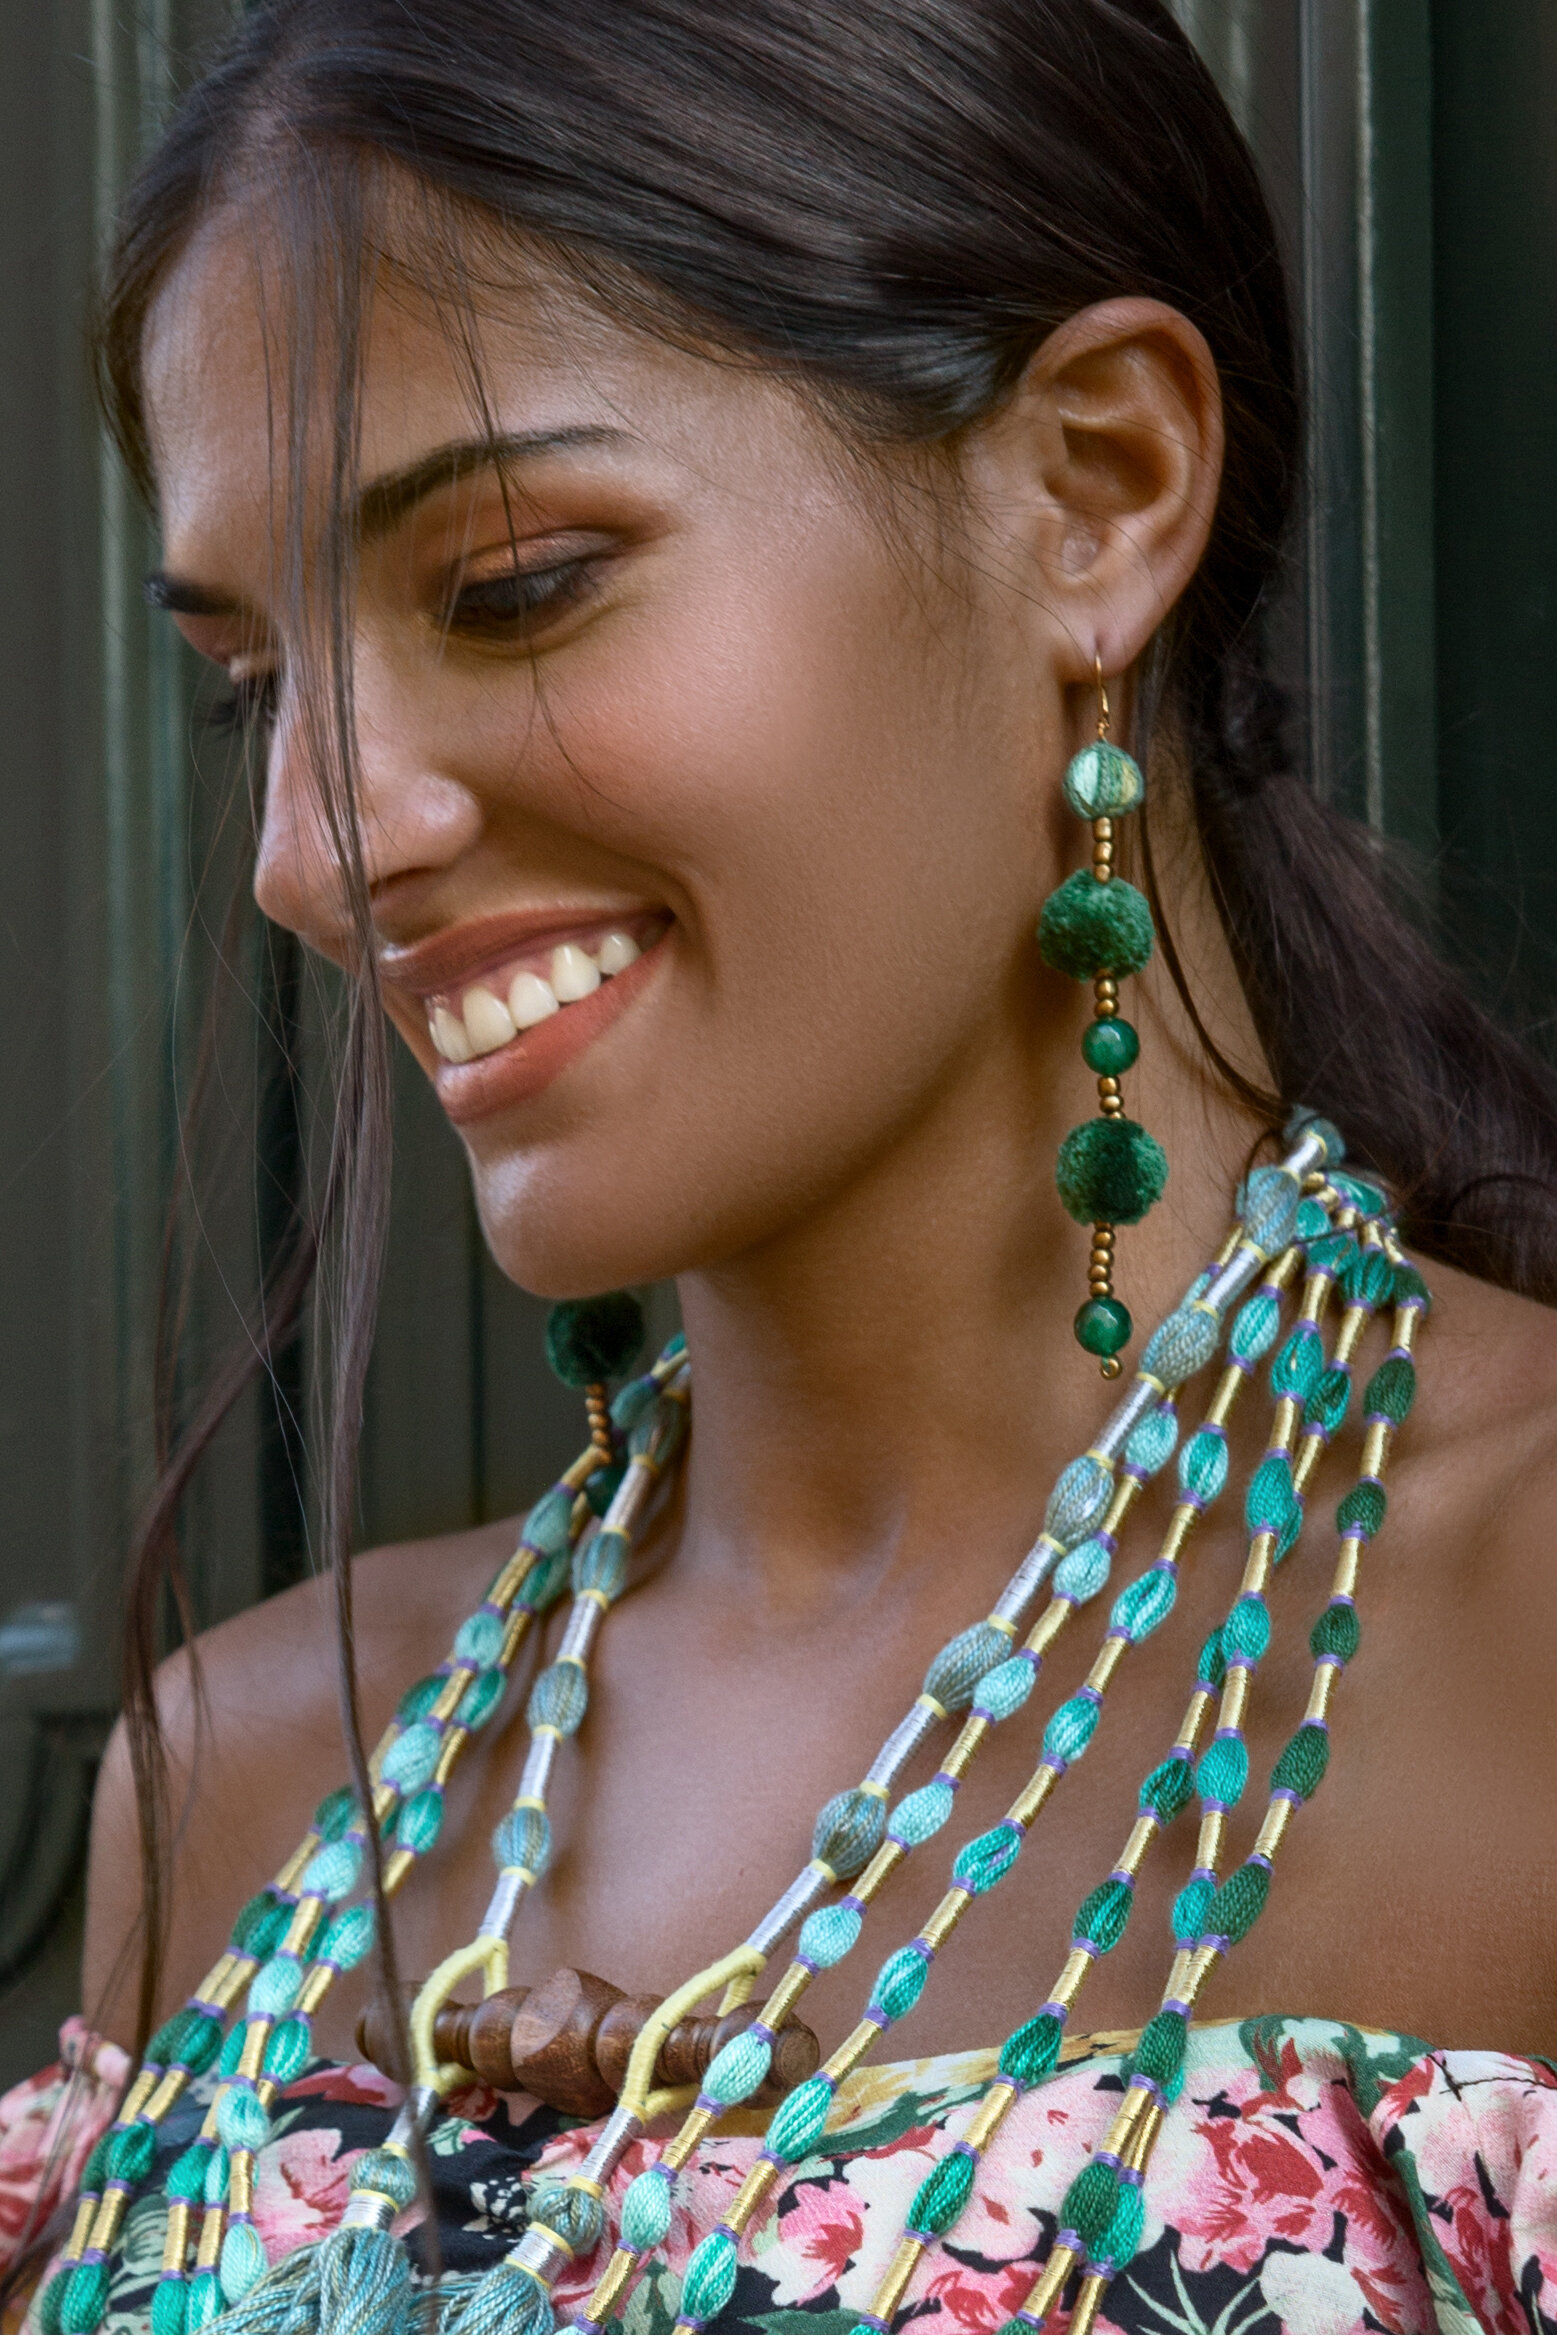 Gulab gemstone earrings - Emerald